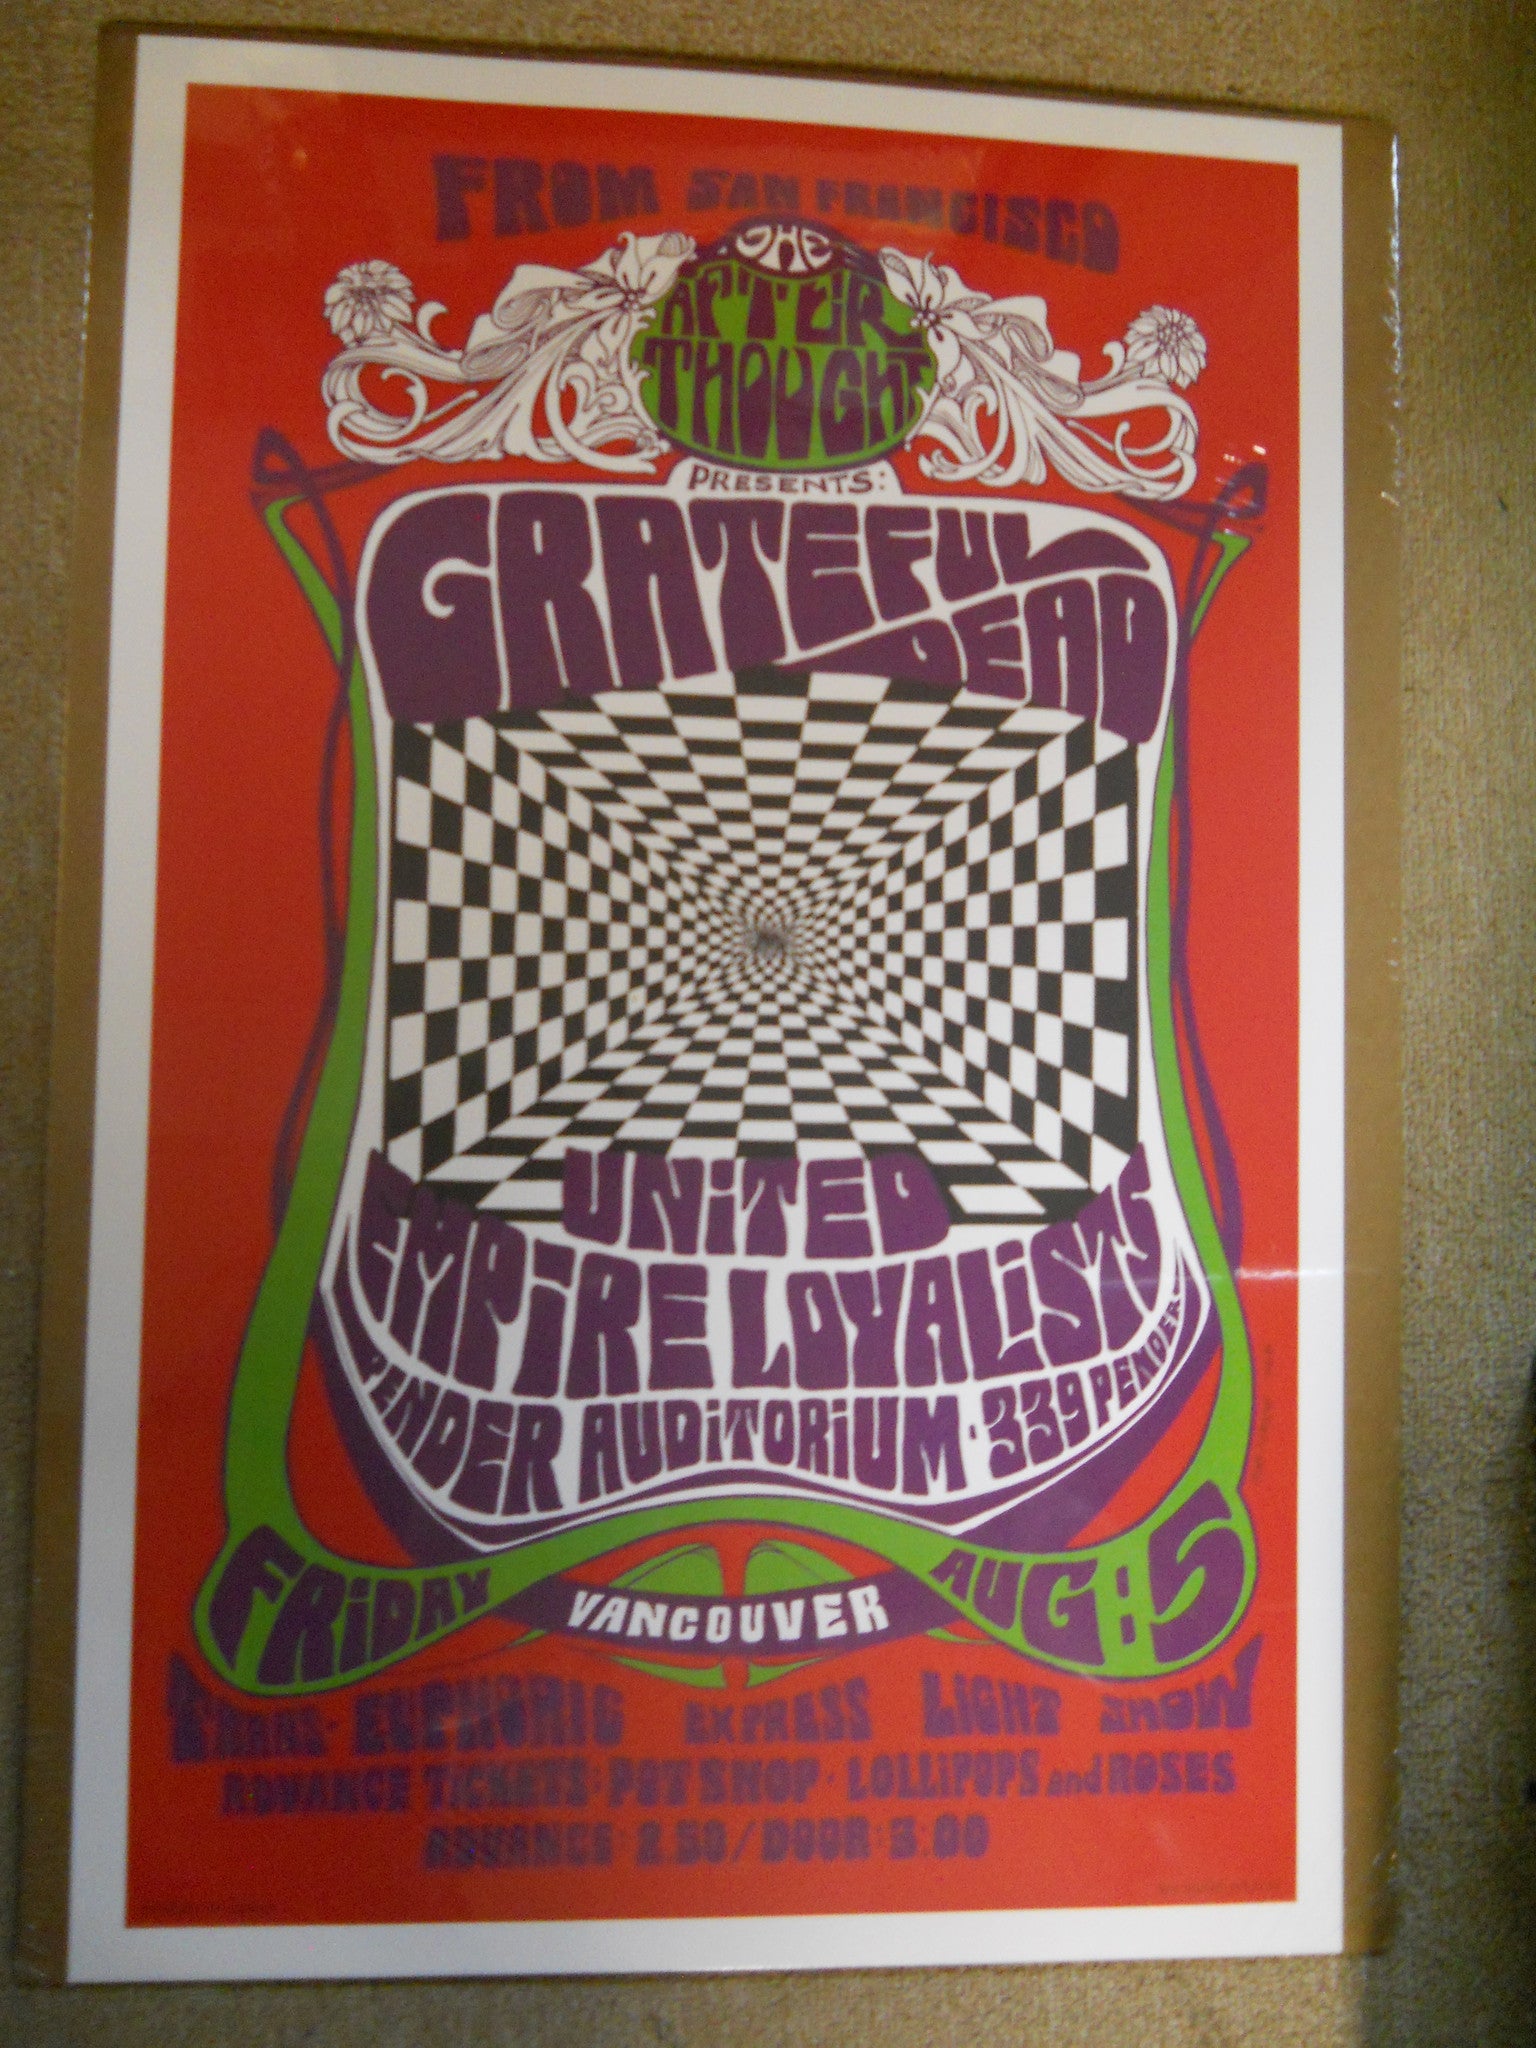 Grateful Dead Vancouver Poster - HalfMoonMusic